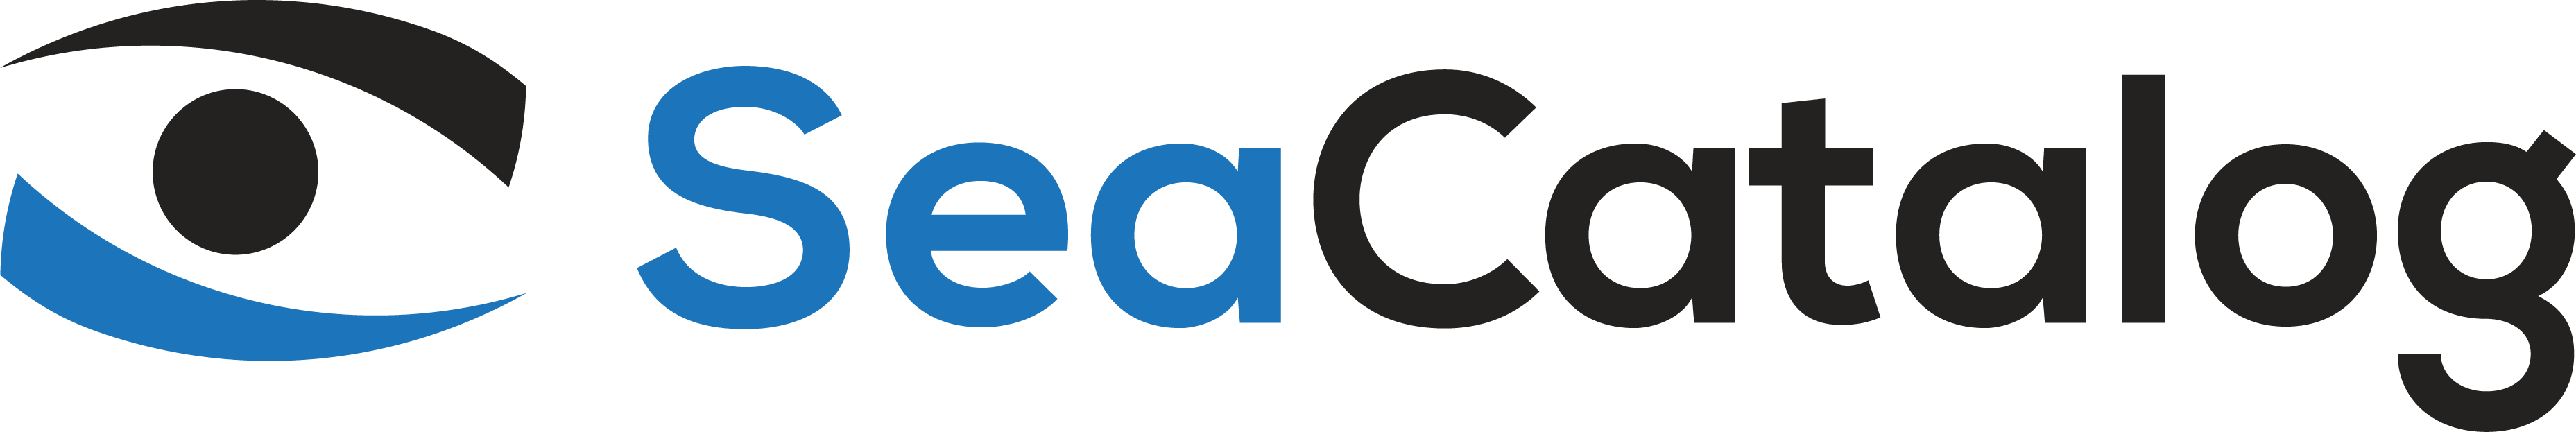 2sea catalog logo